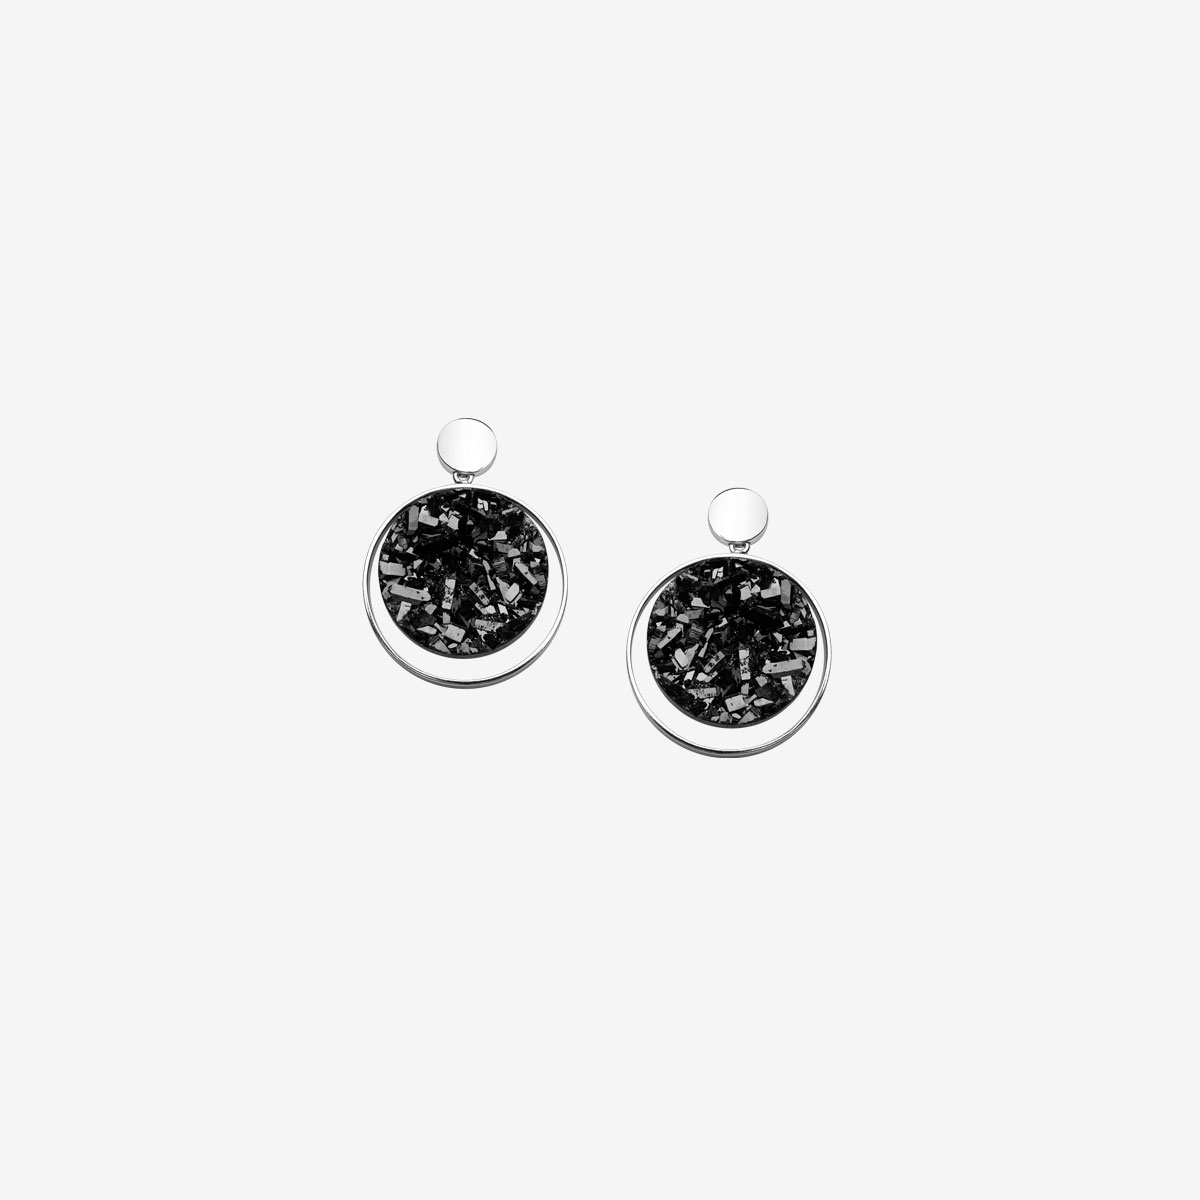 Gul handmade earrings in sterling silver and metallic black agate druse designed by Belen Bajo